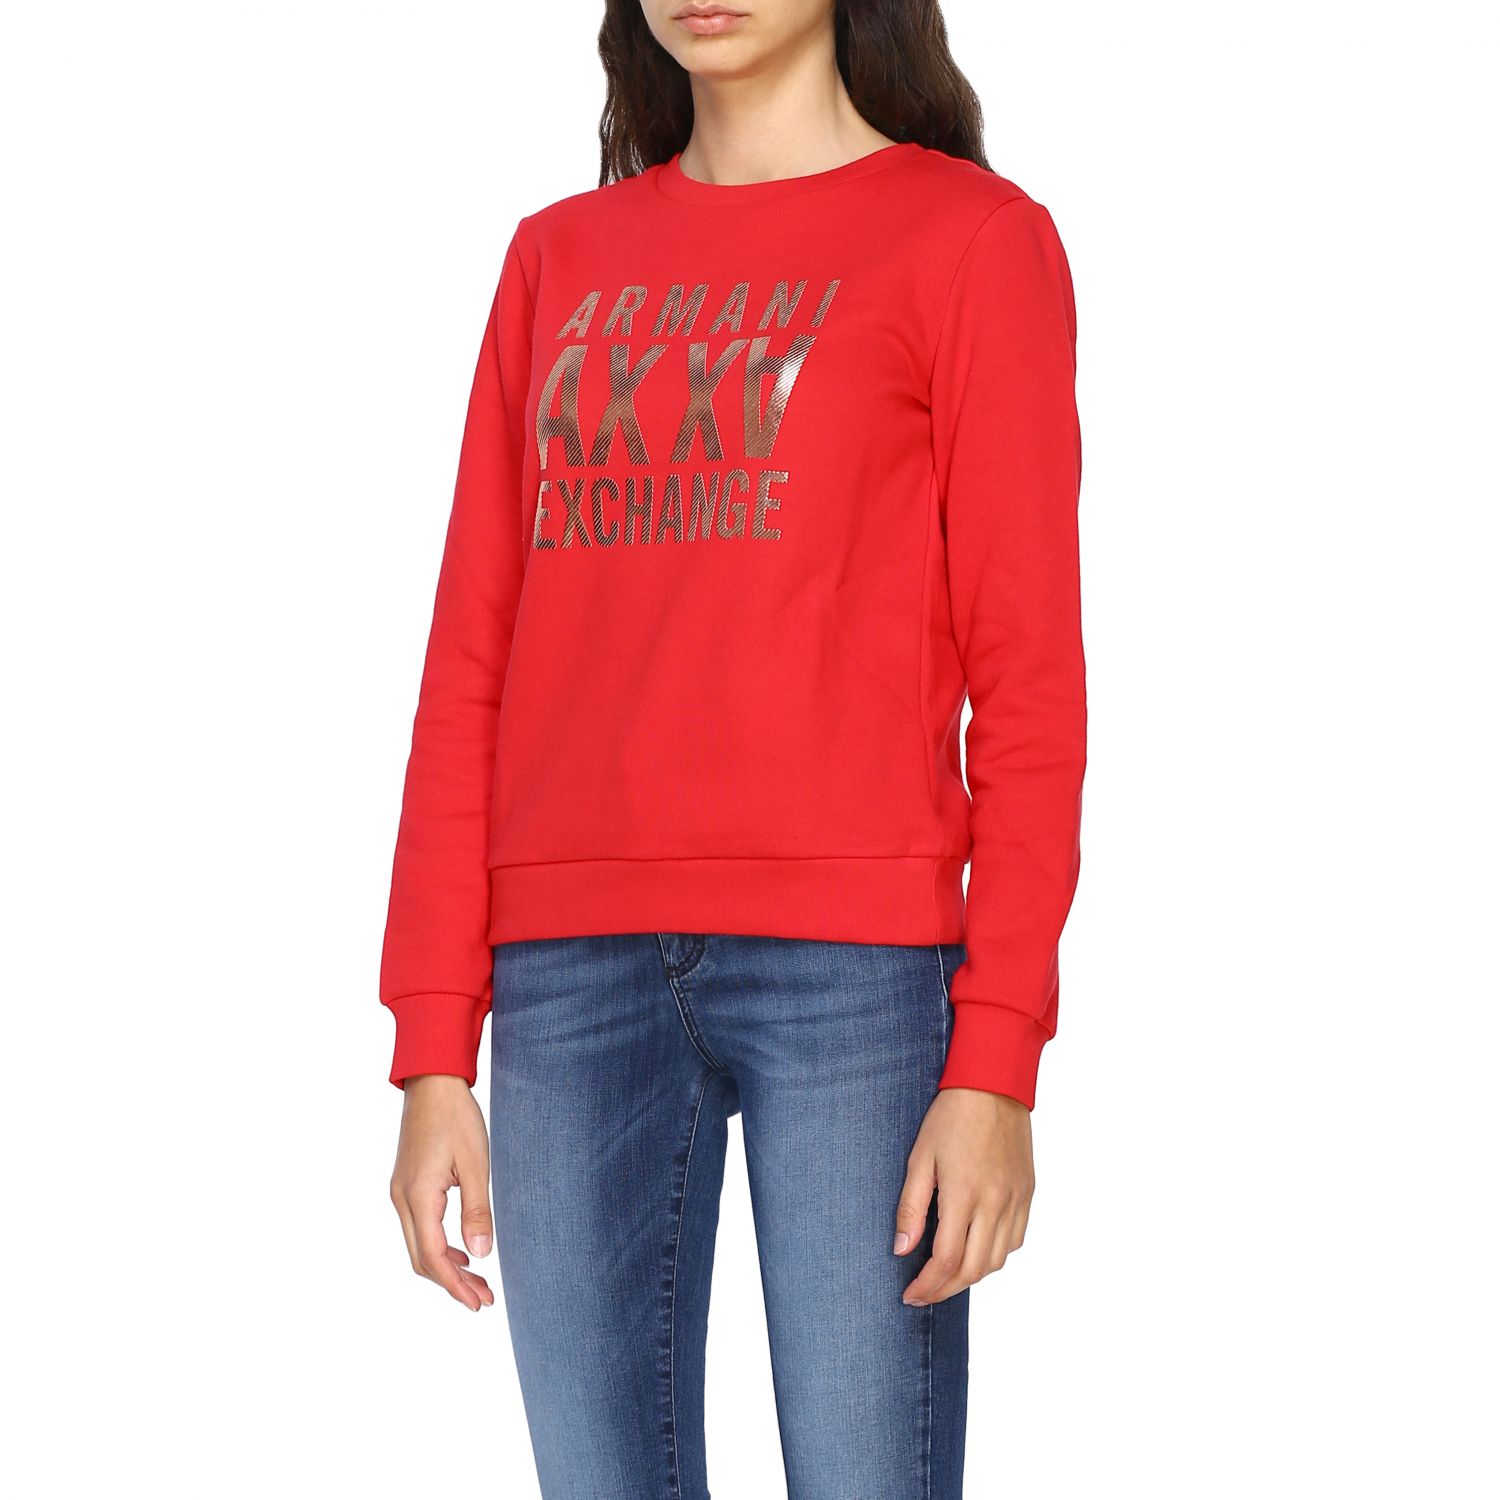 Armani Exchange Outlet: Jumper women - Red | Sweatshirt Armani Exchange ...